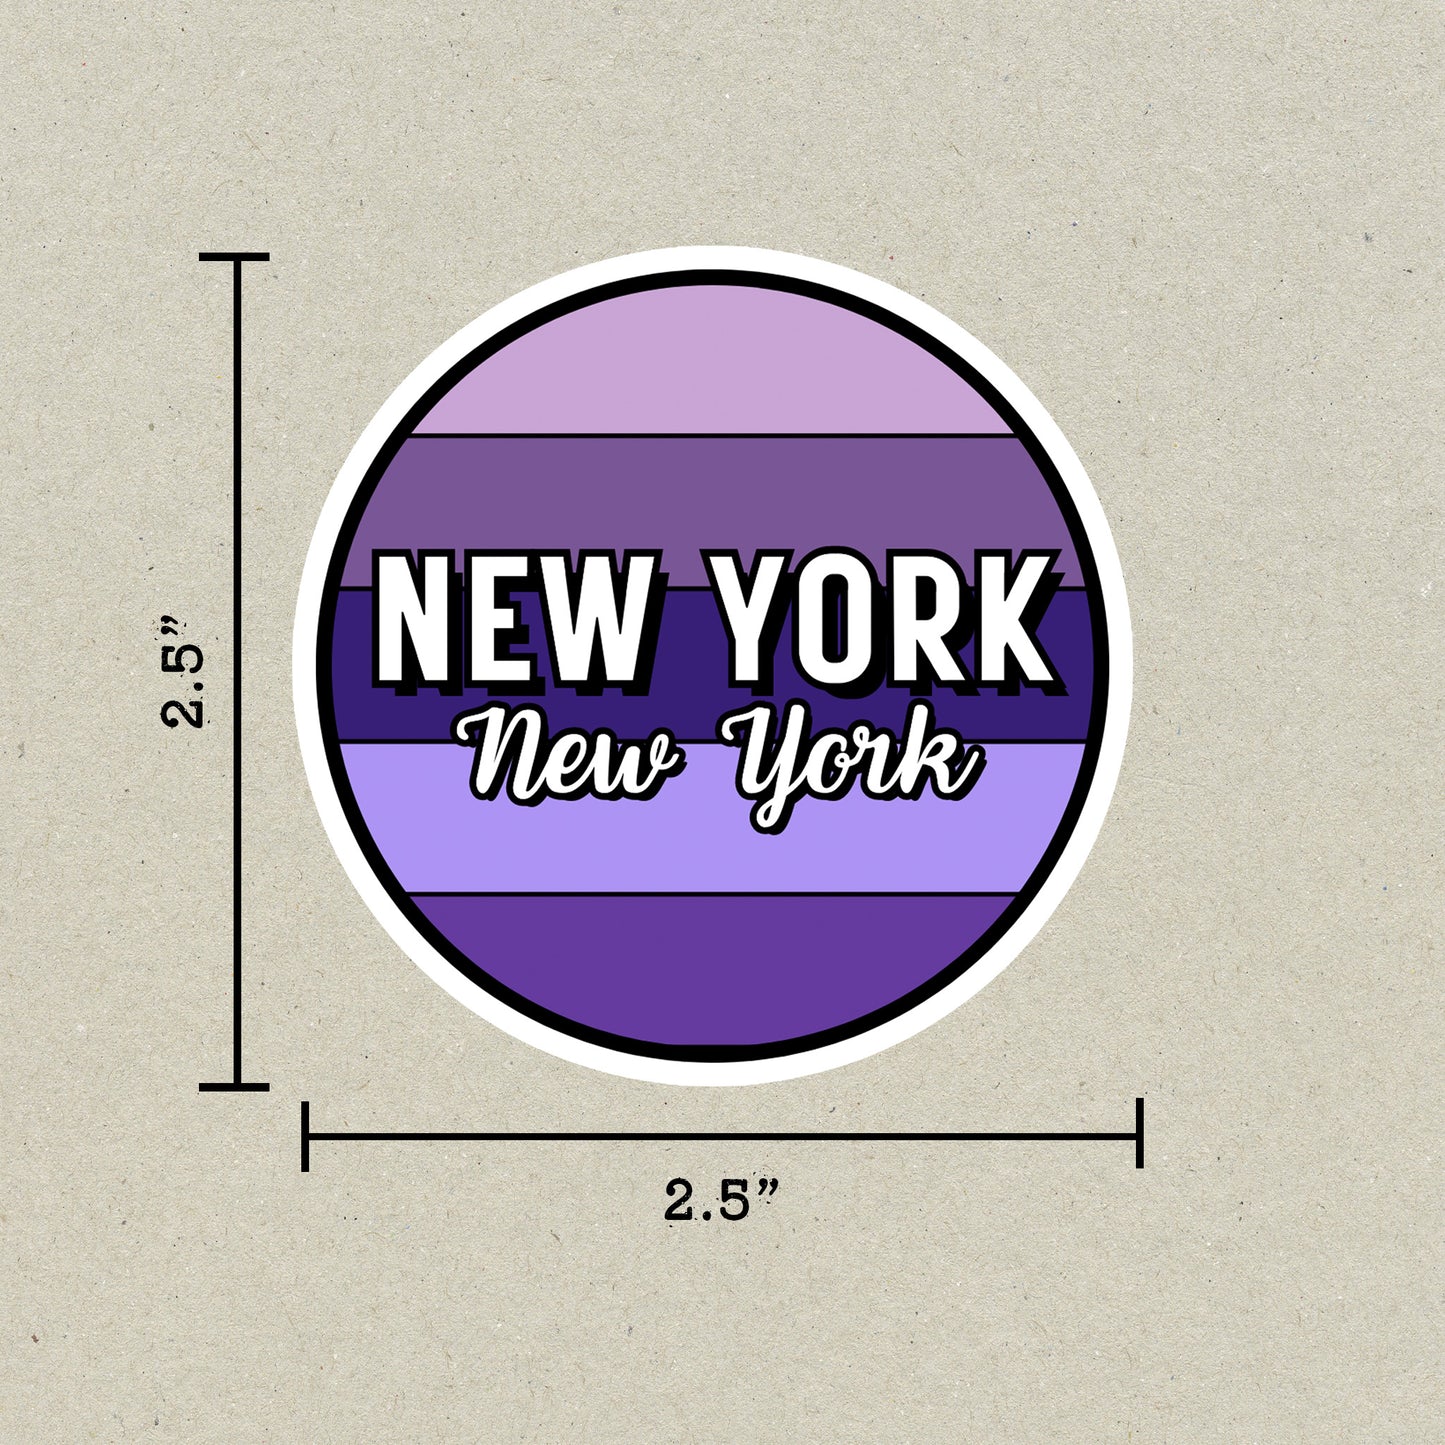 New York, New York Circle Sticker